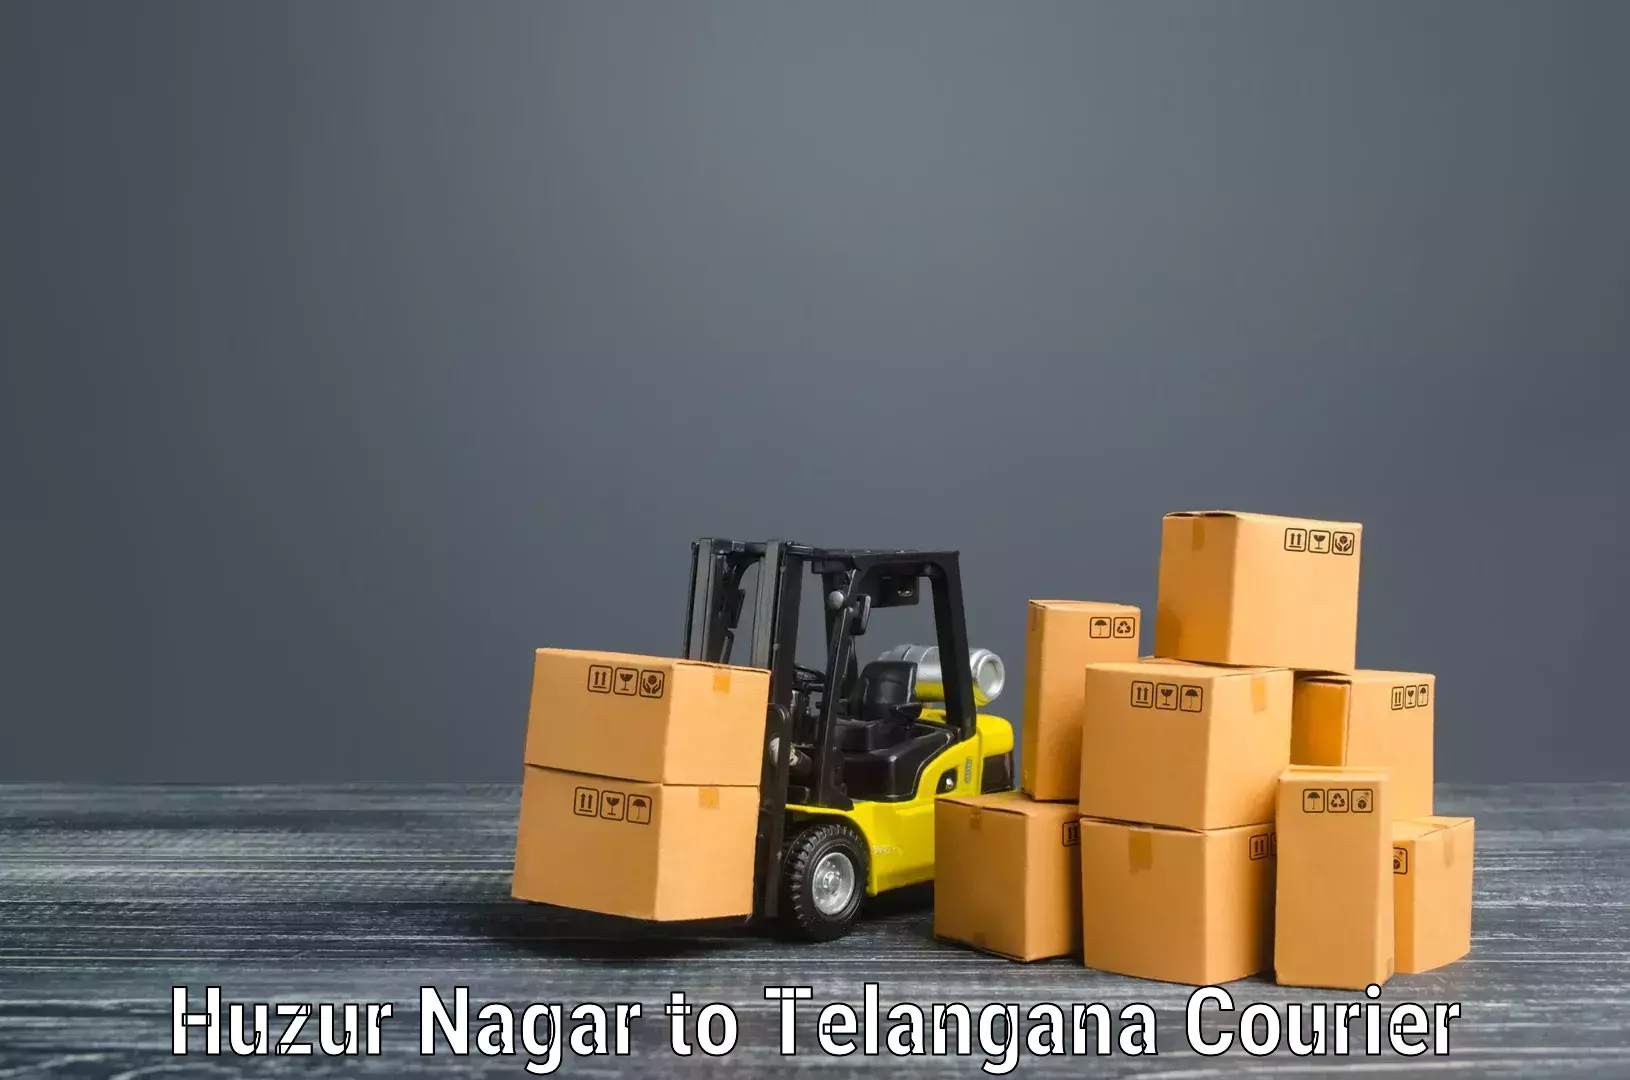 Furniture relocation experts Huzur Nagar to Nizamabad